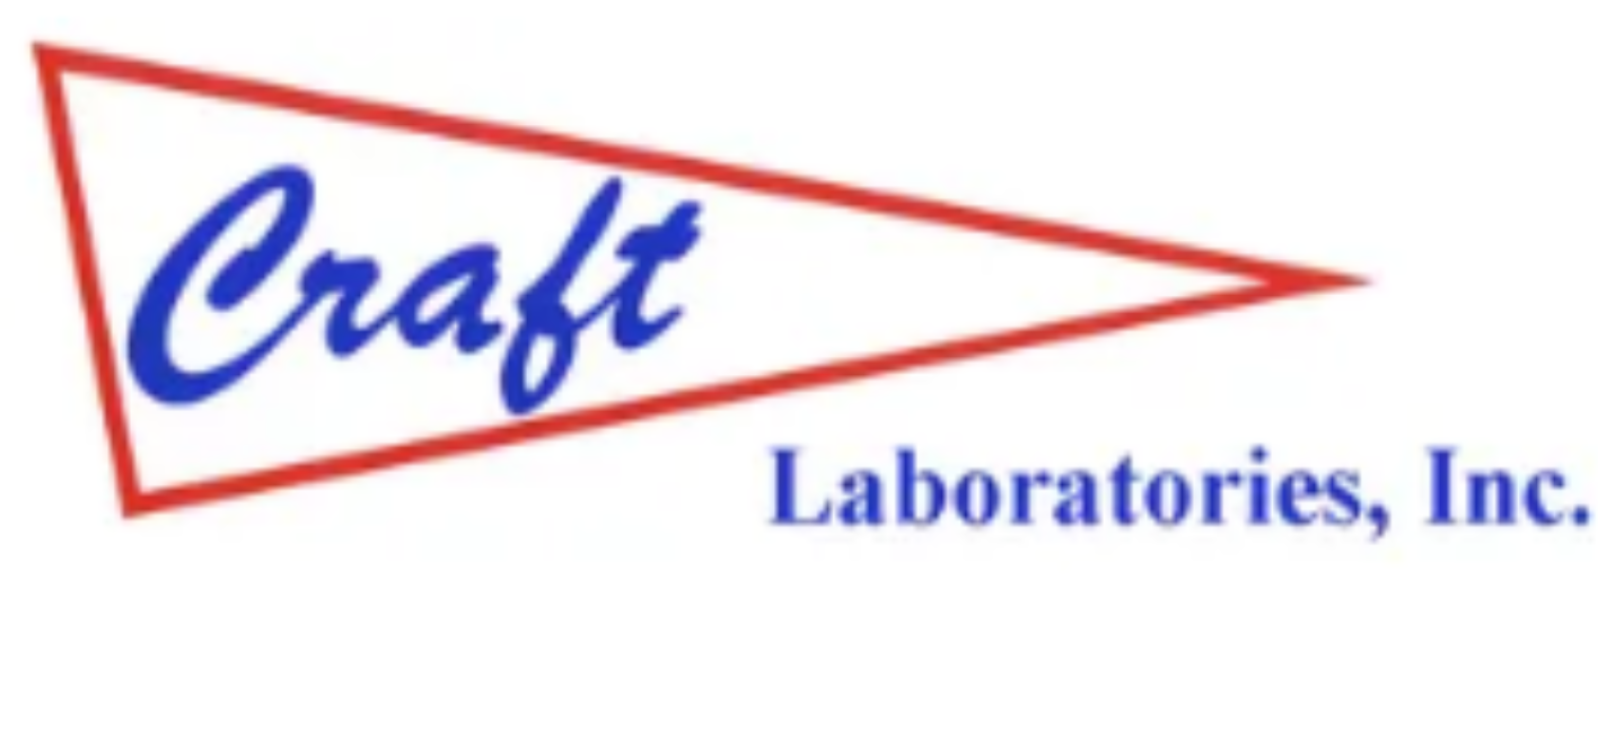 Craft Laboratories - Fort Wayne, IN 46808 - (260)432-9467 | ShowMeLocal.com